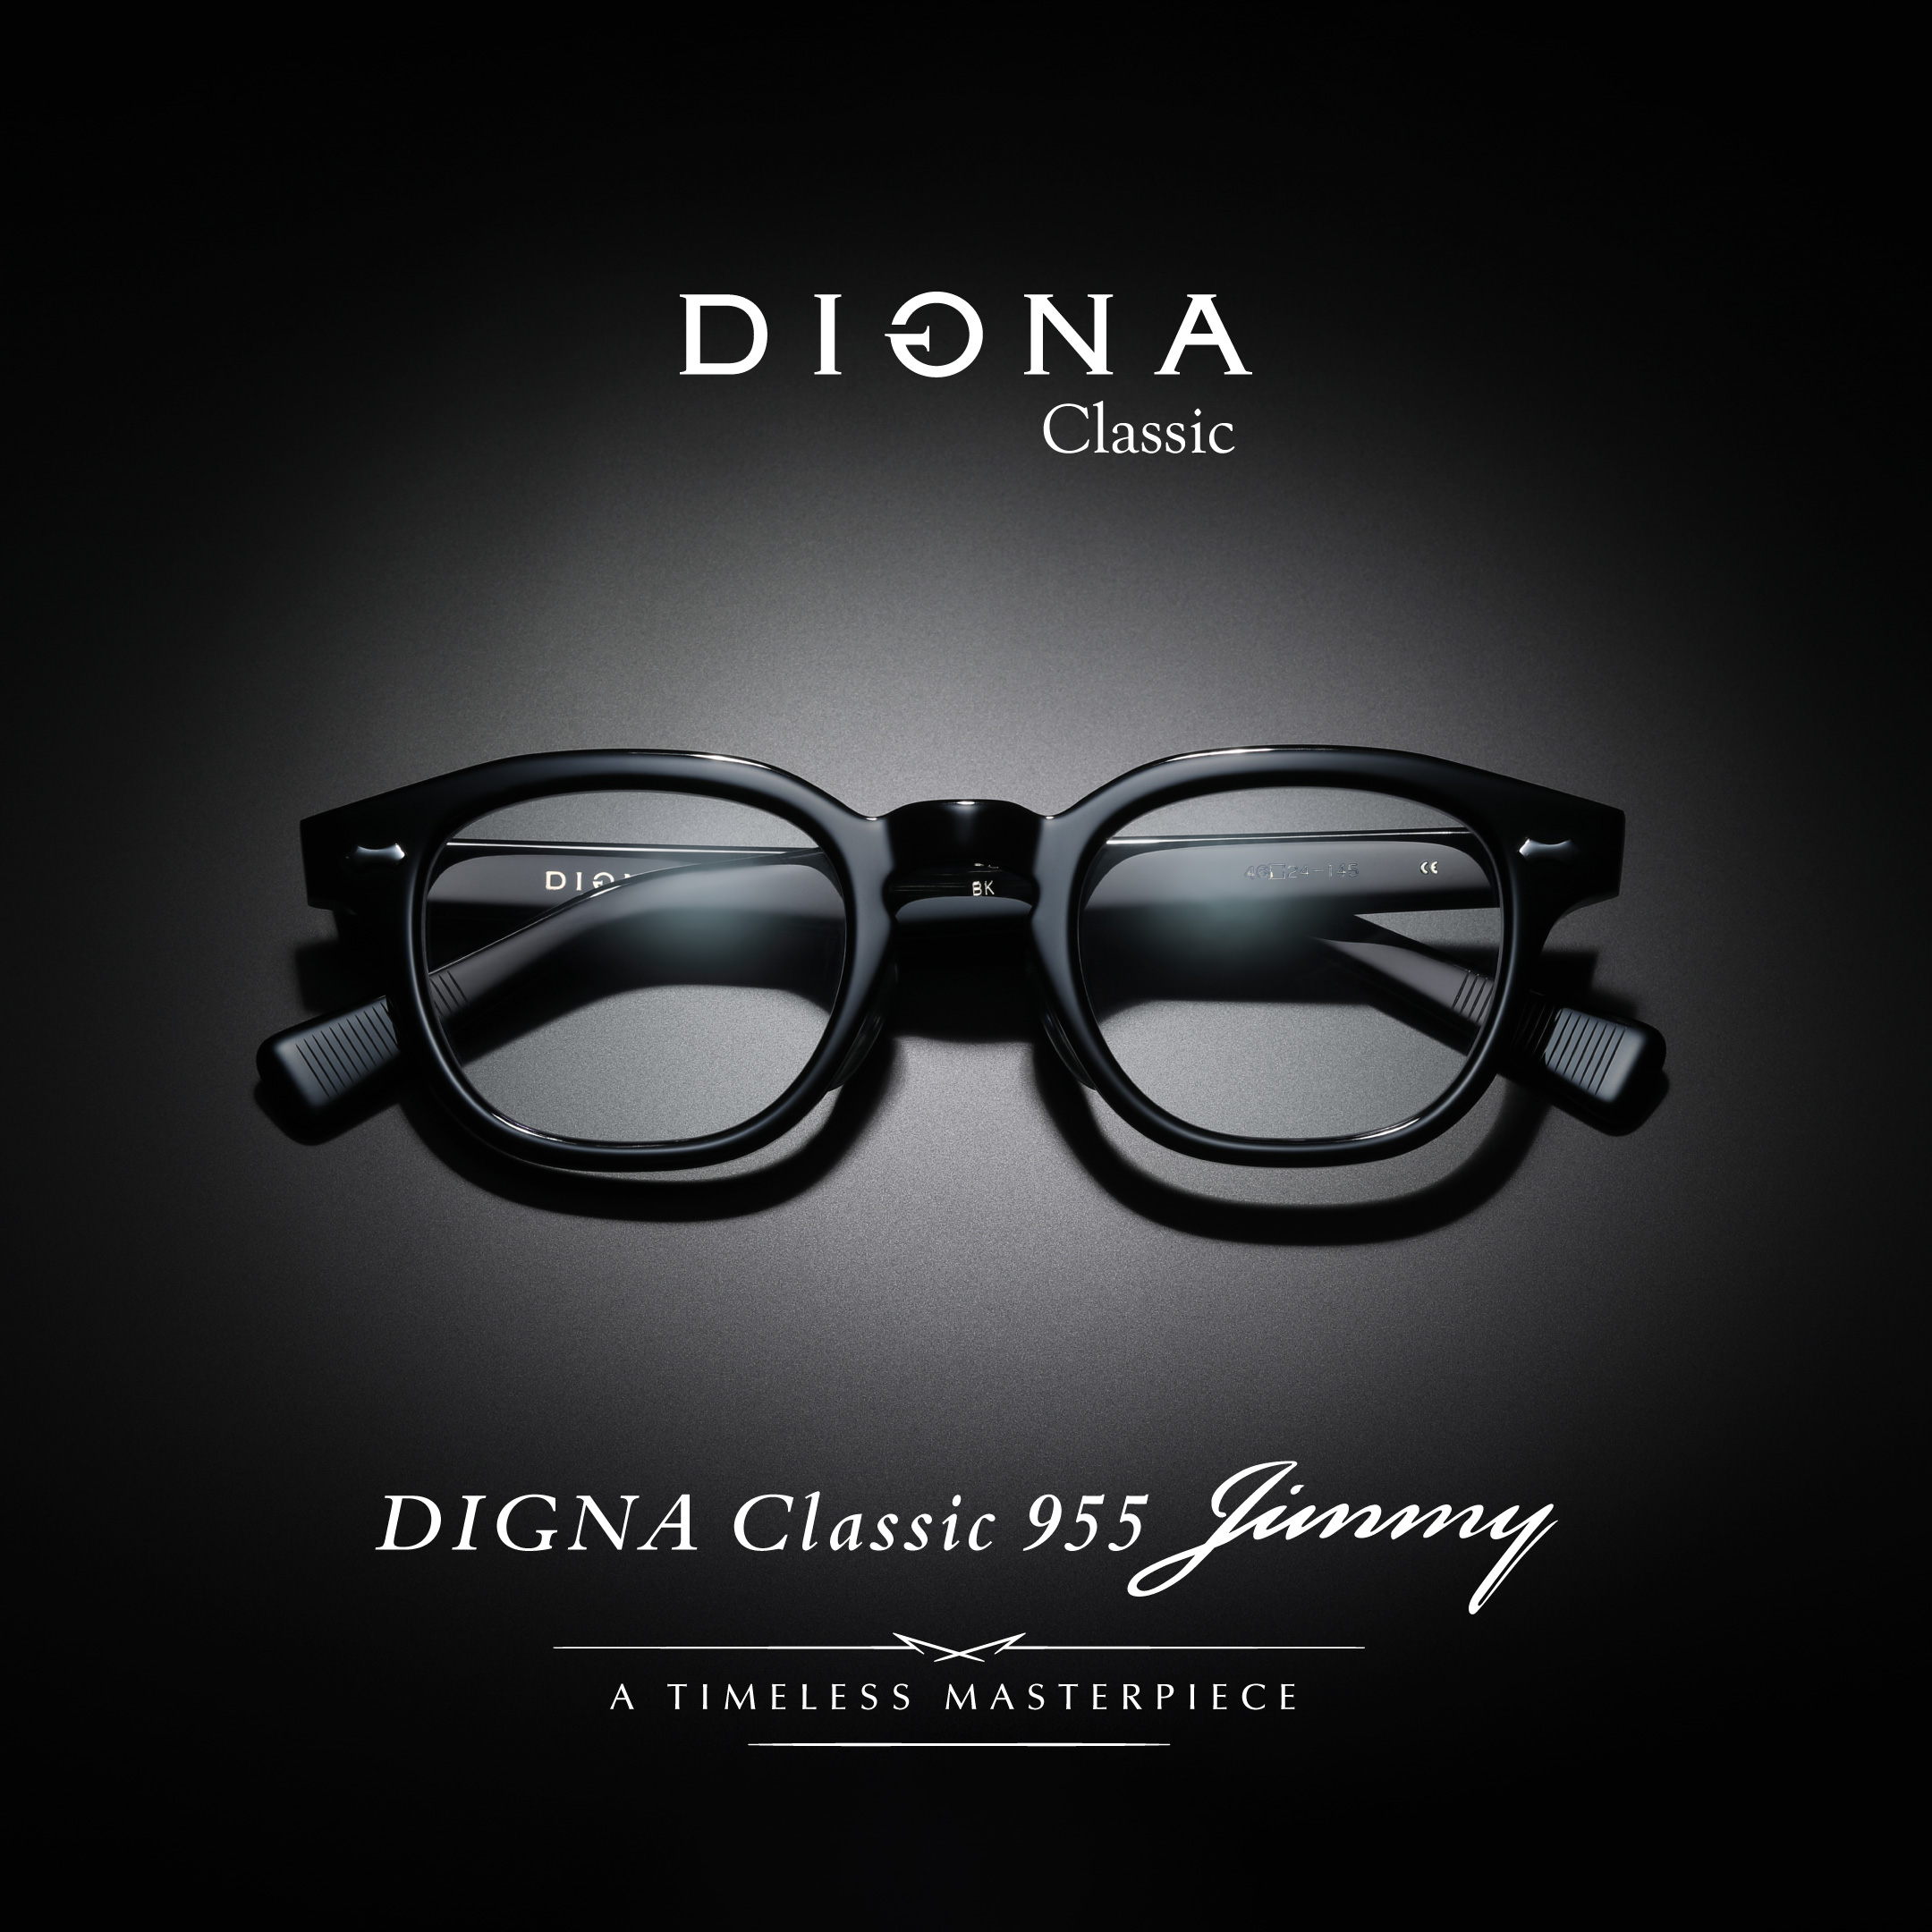 DIGNA Classic ディグナ クラシック | パリミキ(三城)公式通販サイト 